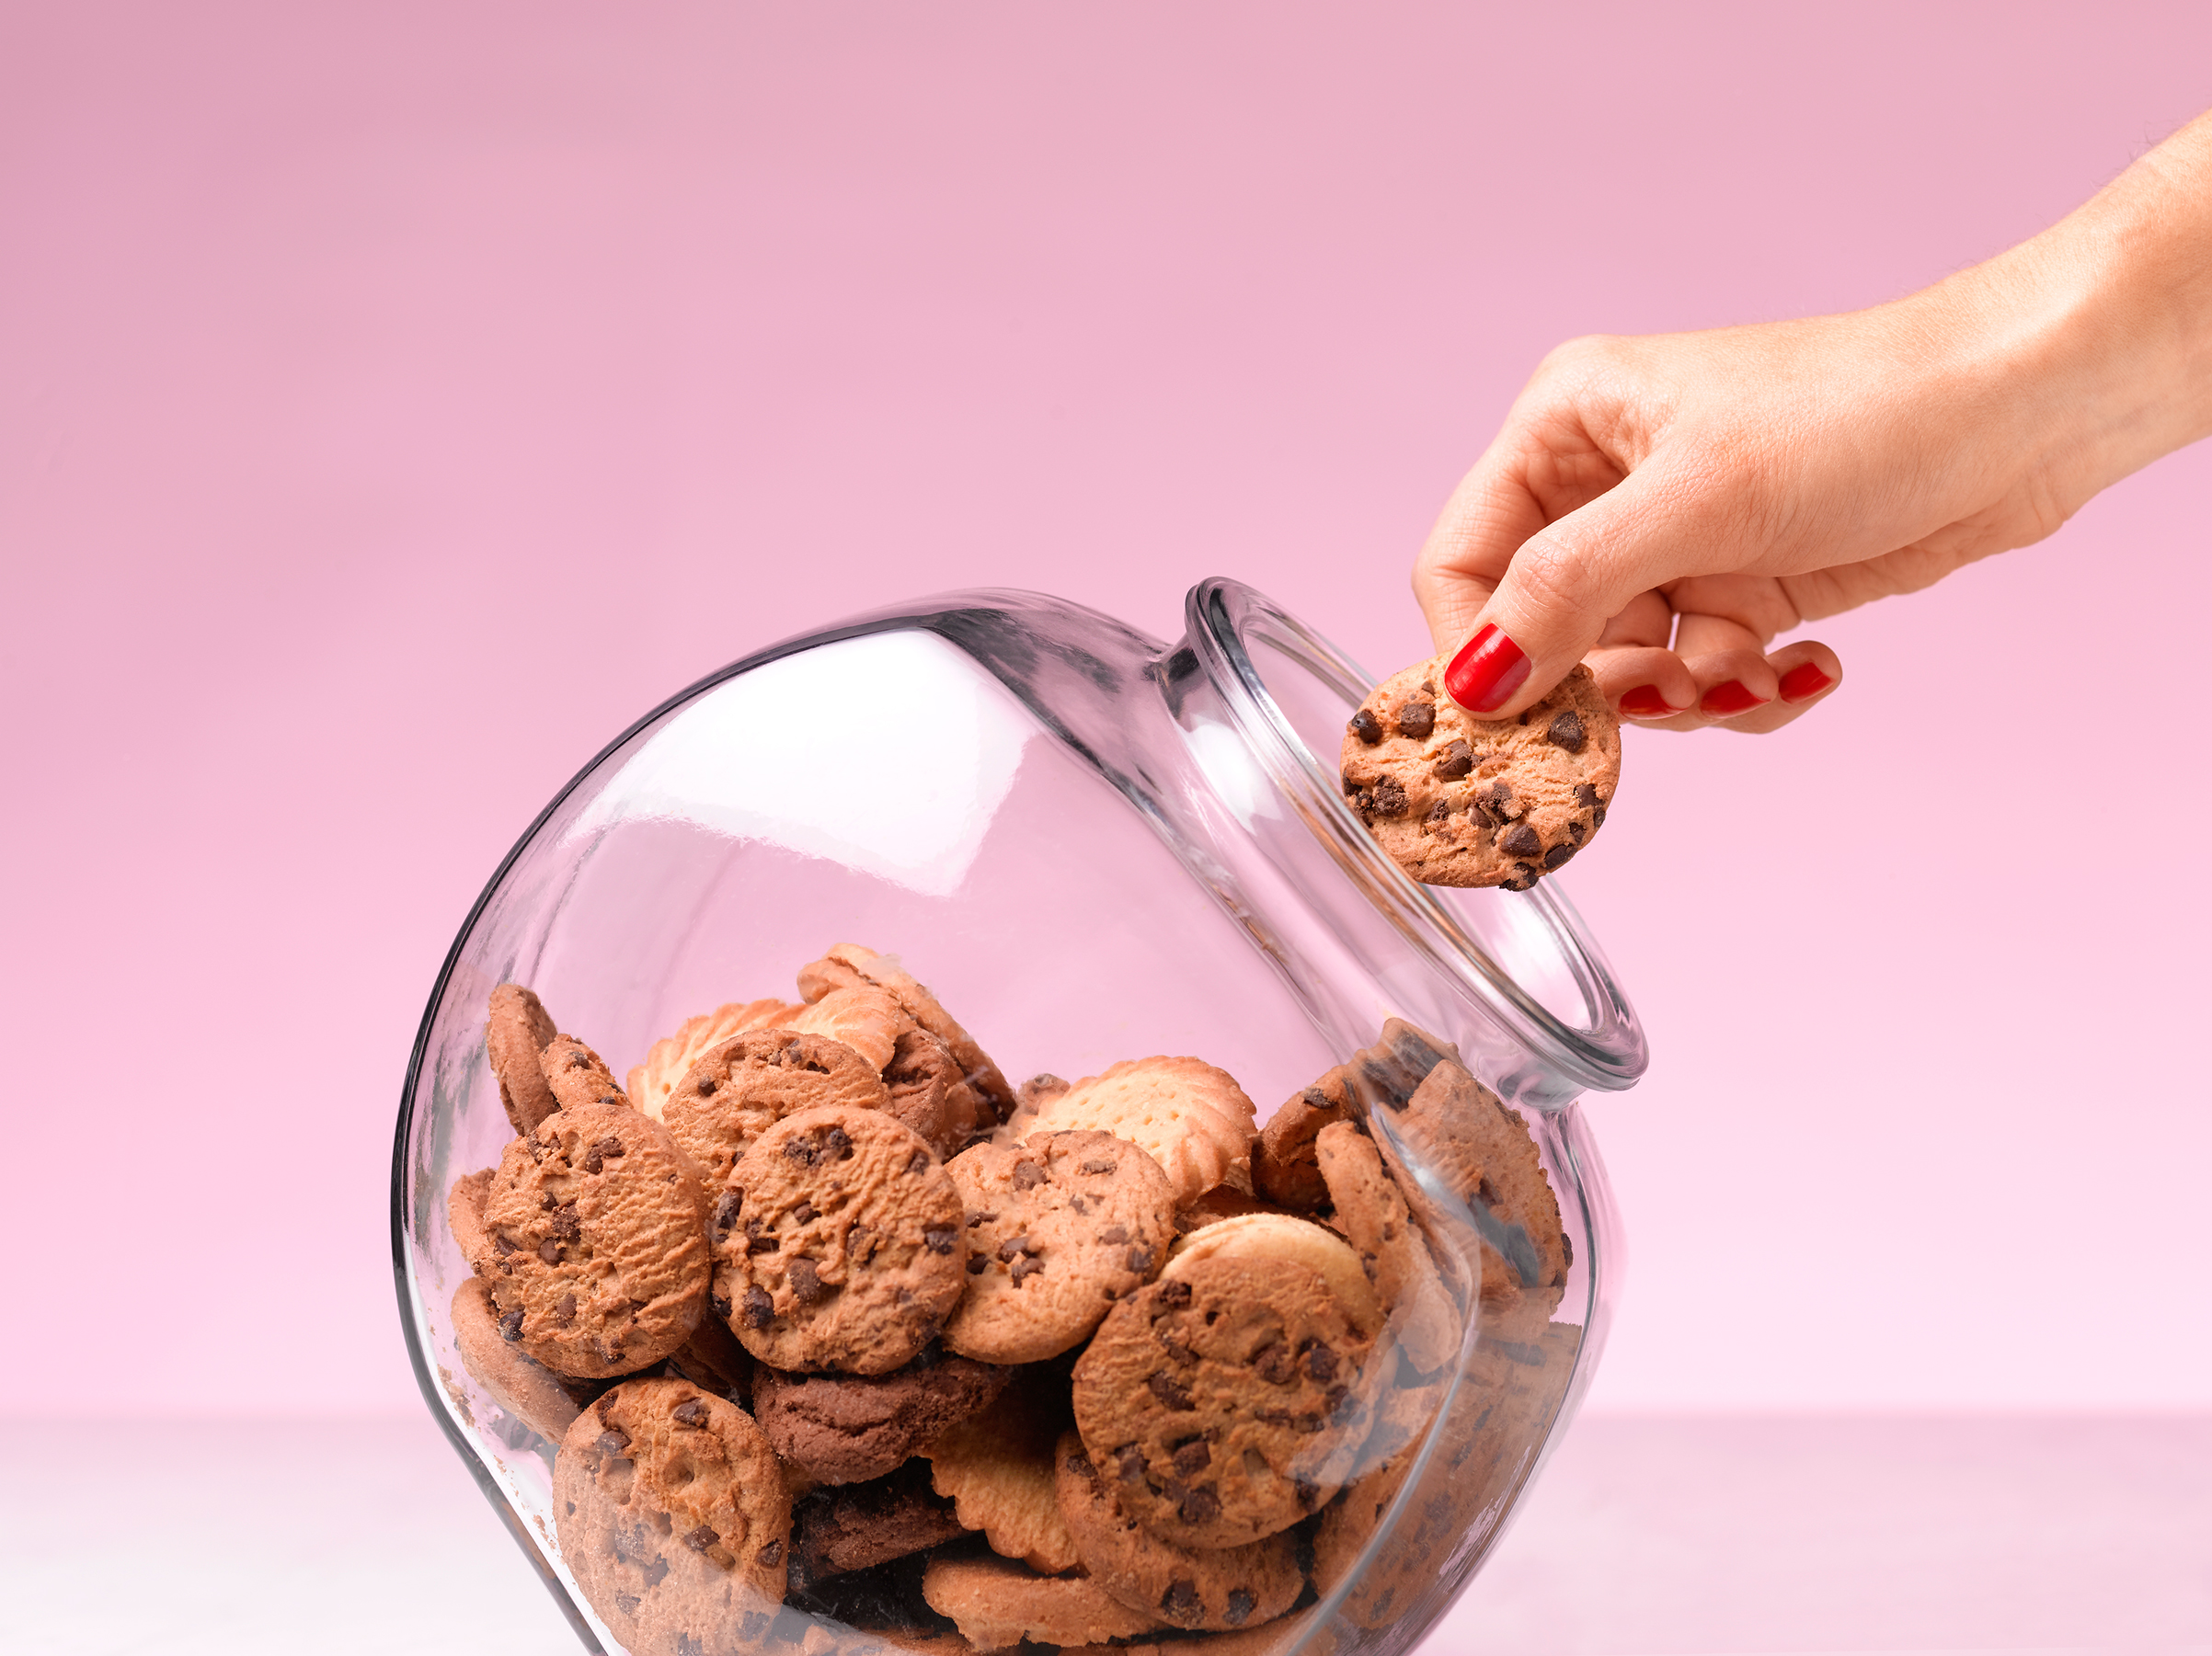 Temptation - hand in a cookie jar